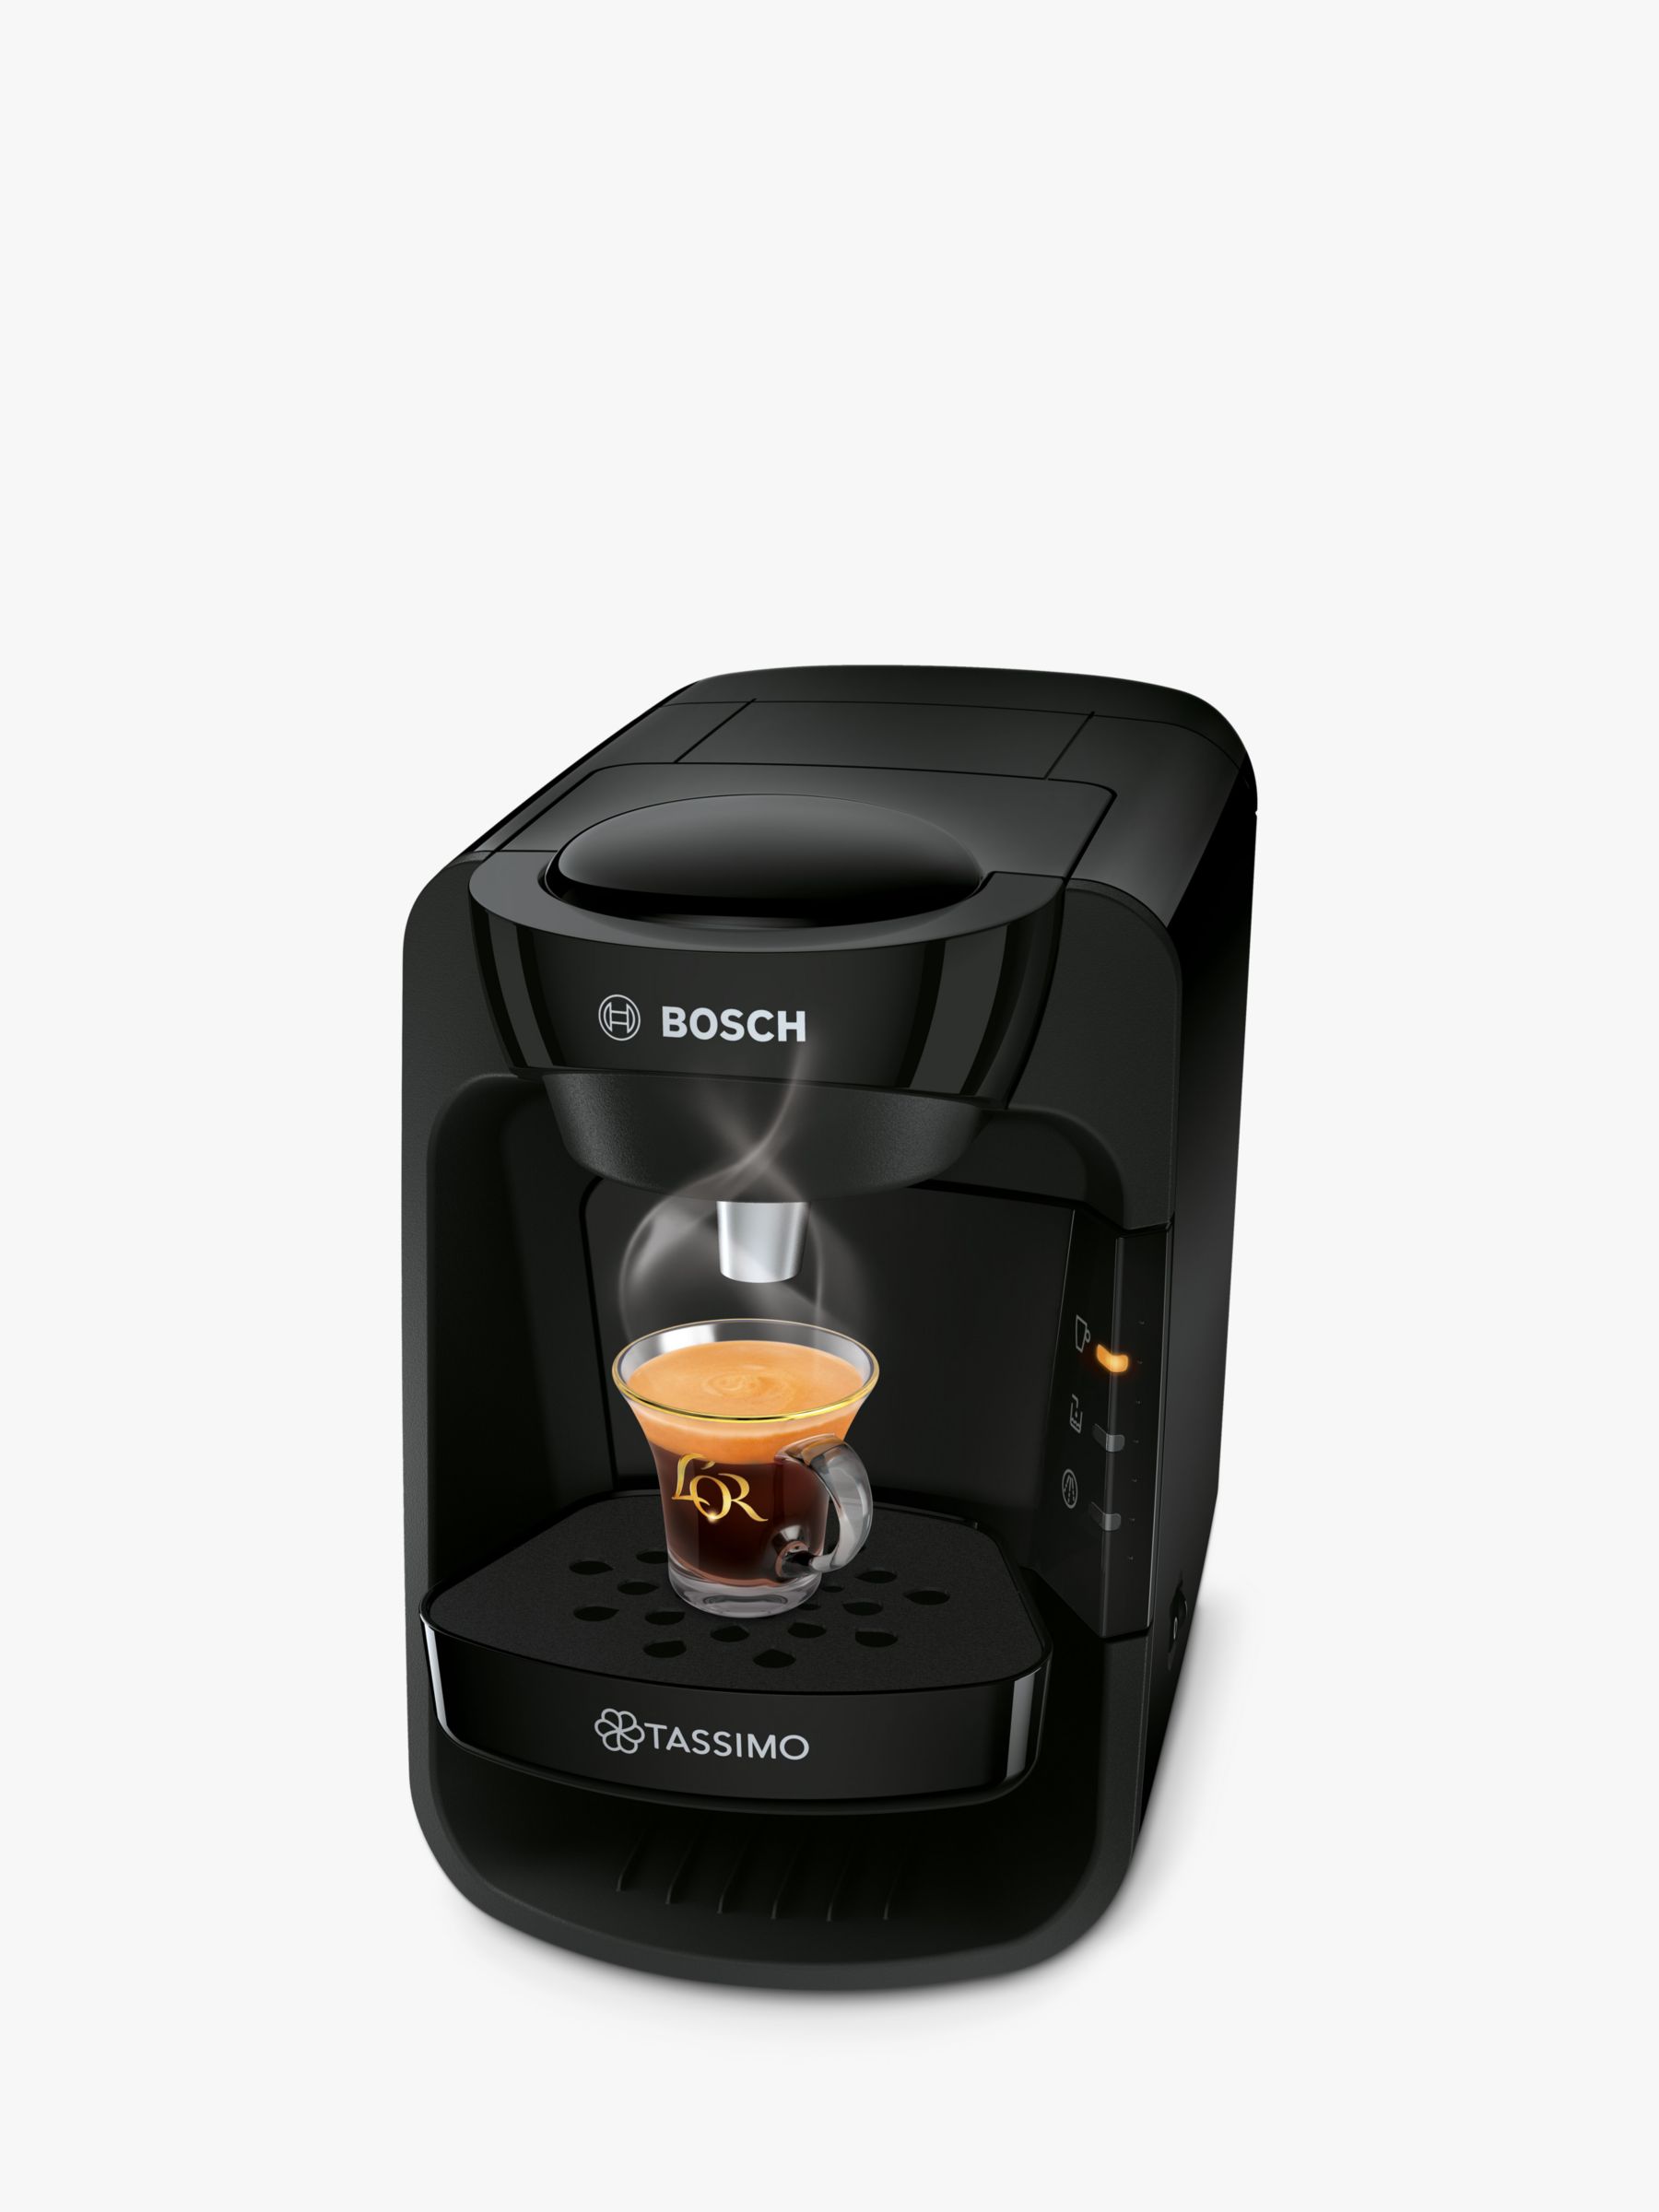 TAS3102GB Hot drinks machine